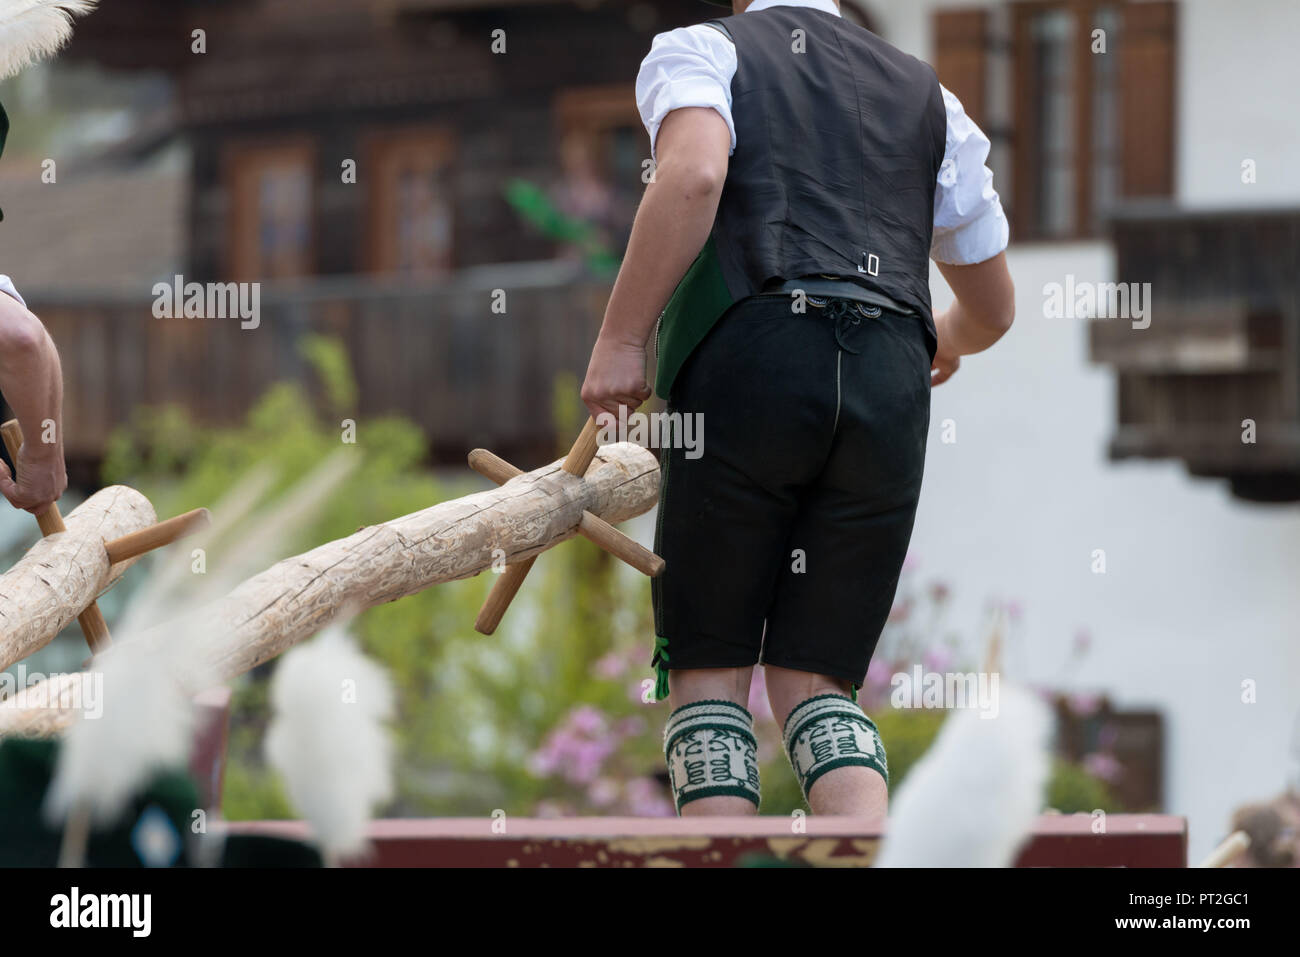 Erecting the Maypole, Man in traditional costume, Bavaria, Germany Stock Photo